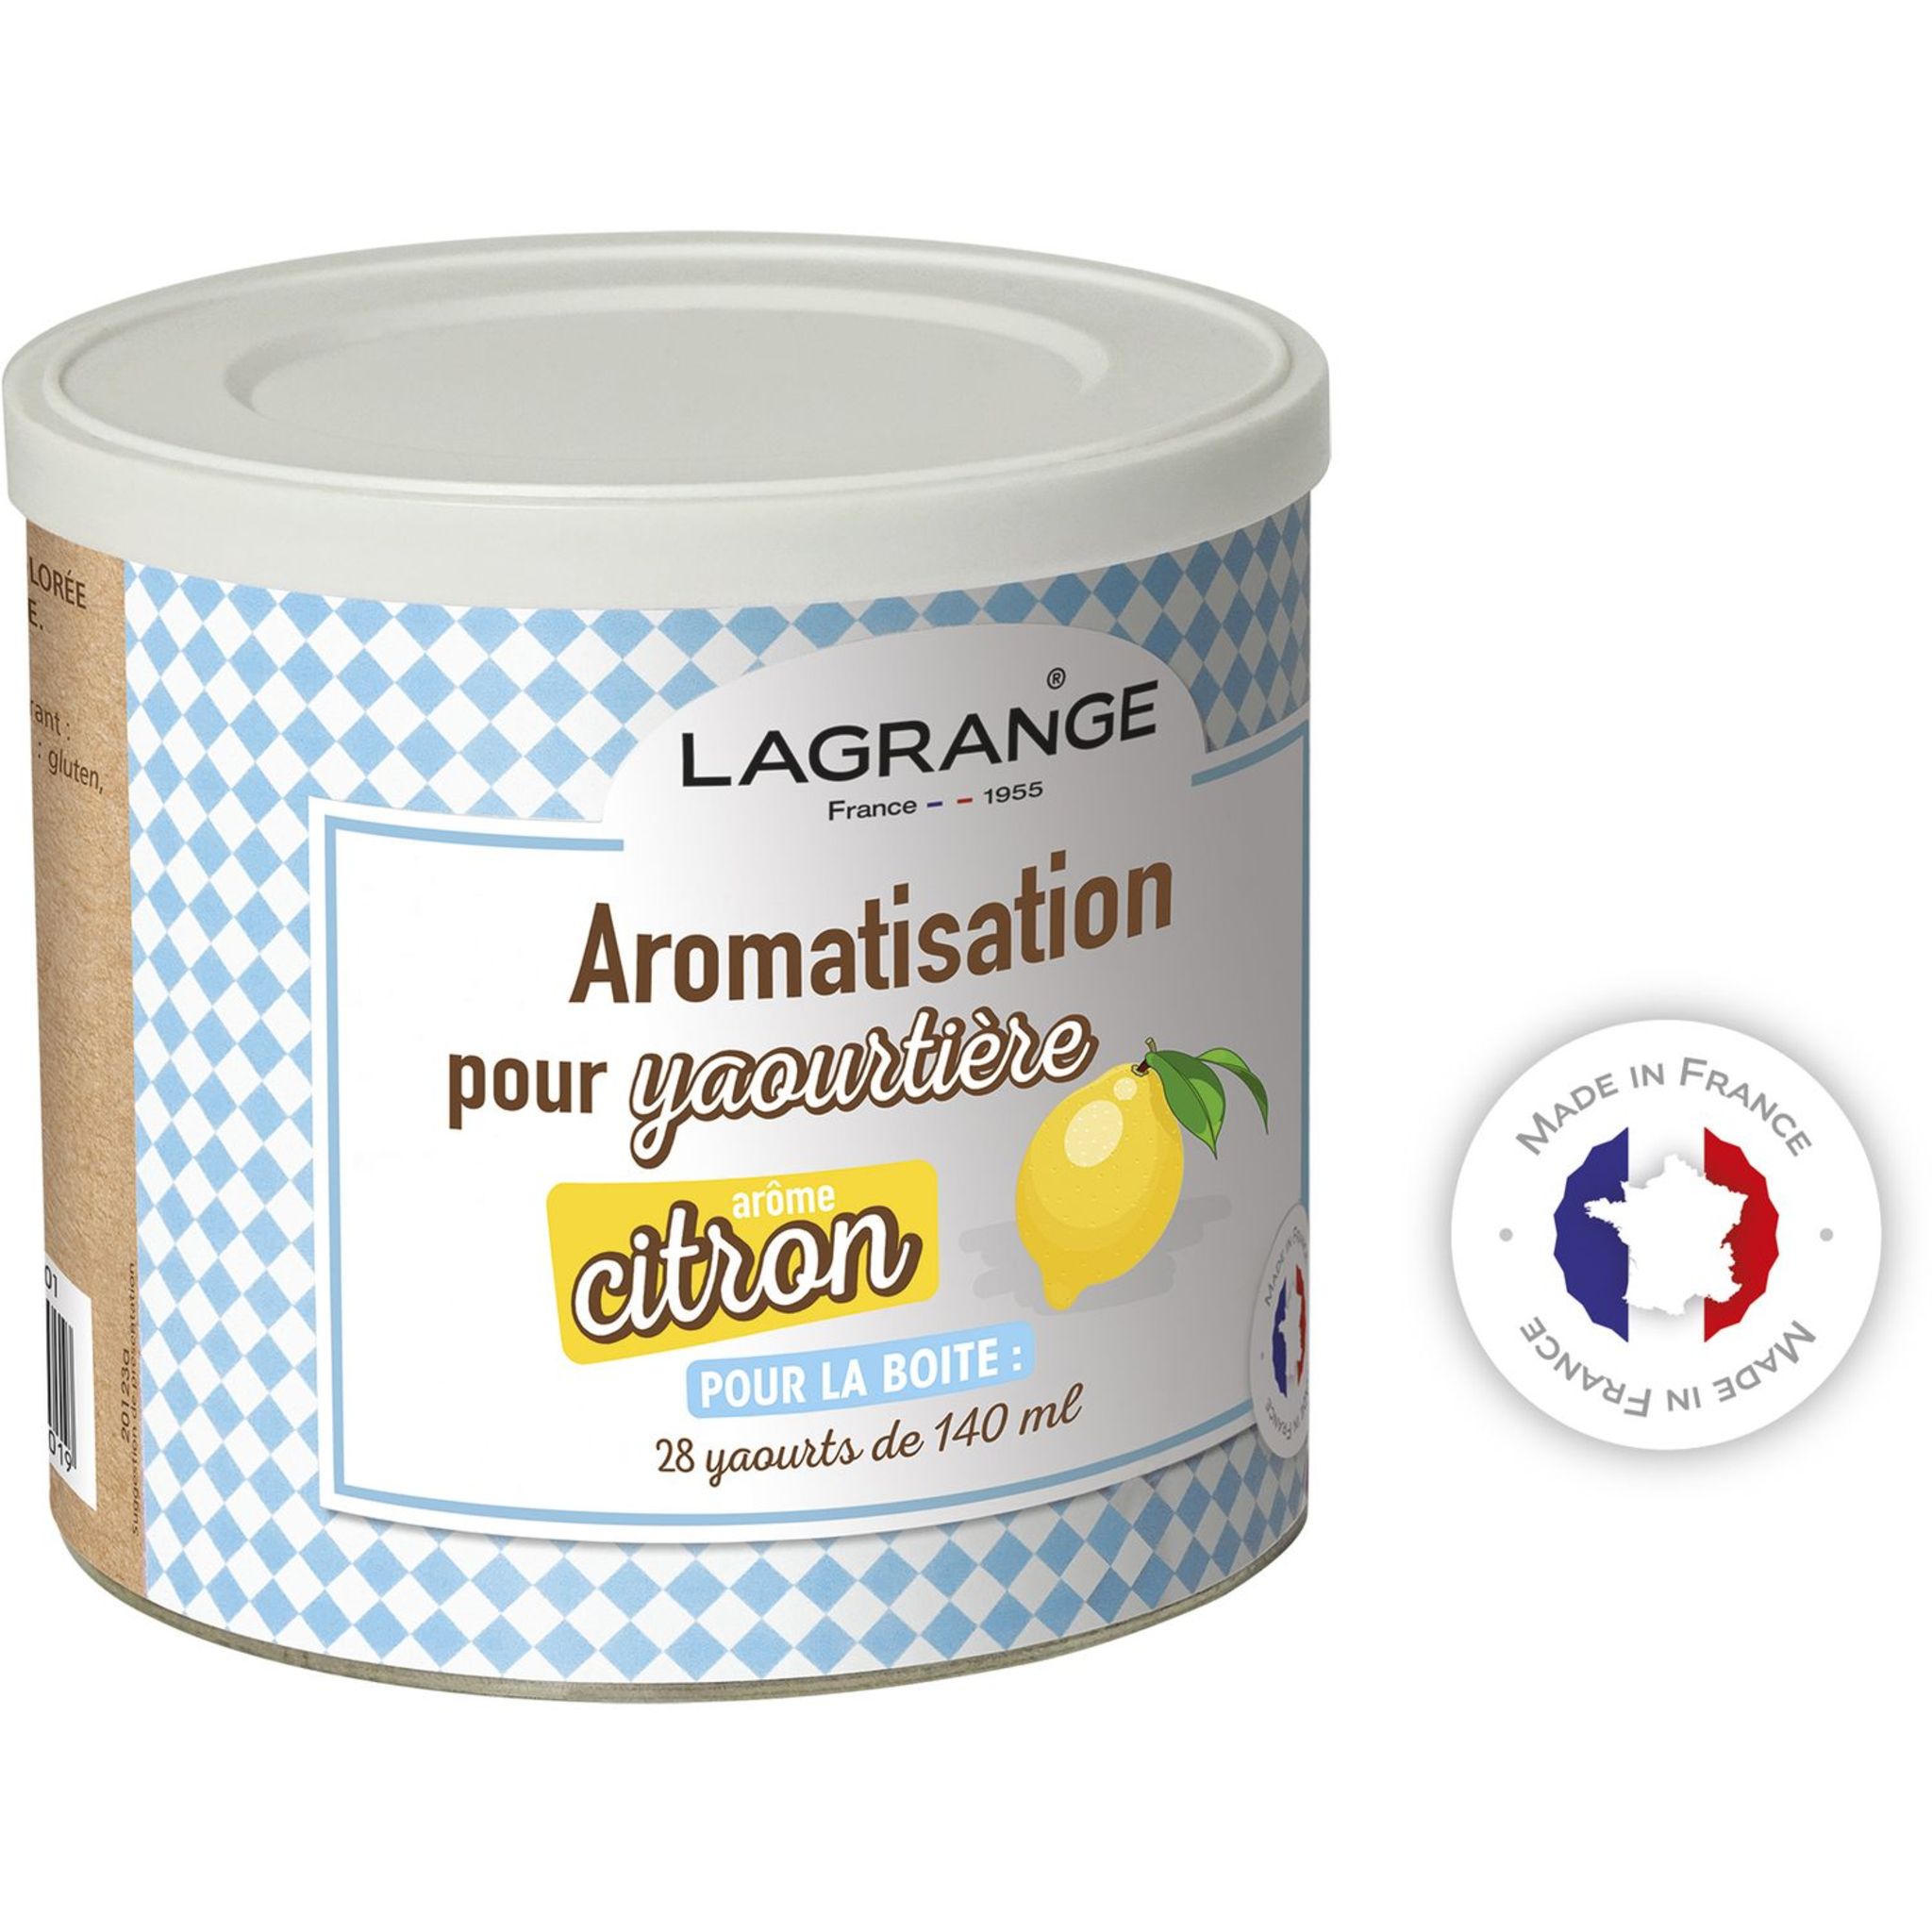 Aromatisation pour yaourtière arôme citron Lagrange - 425 g 